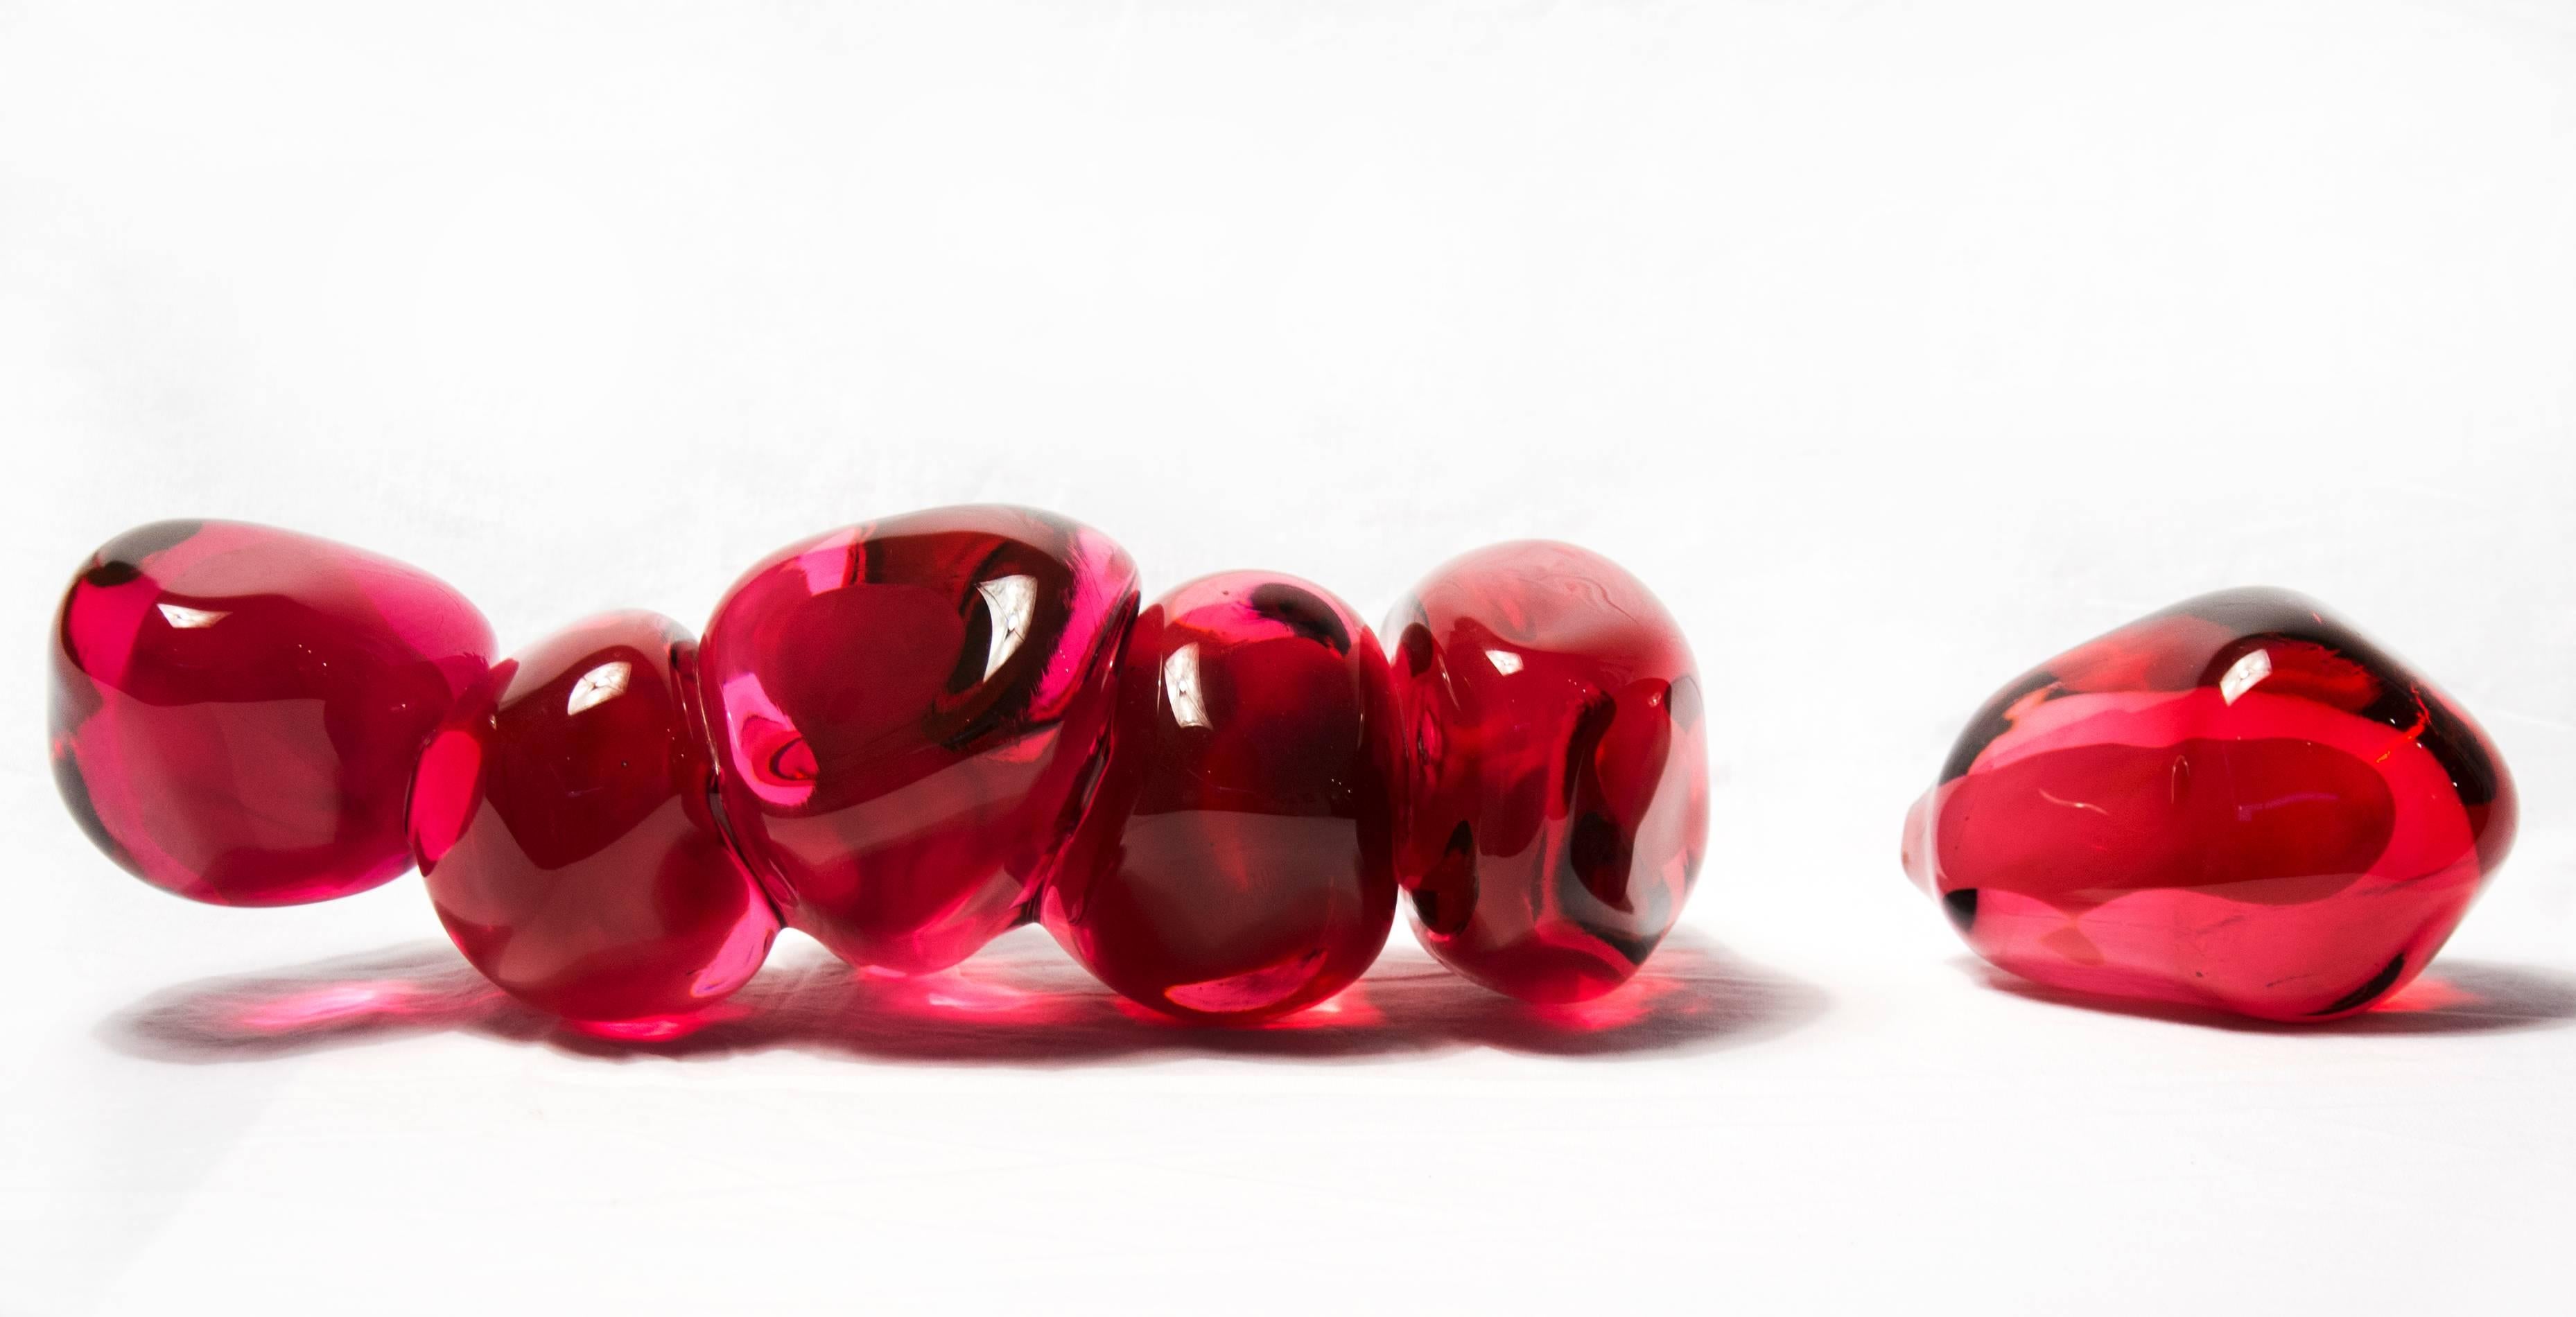 Persephone's Six Seeds - bright, red, pomegranate, glass, still life sculpture